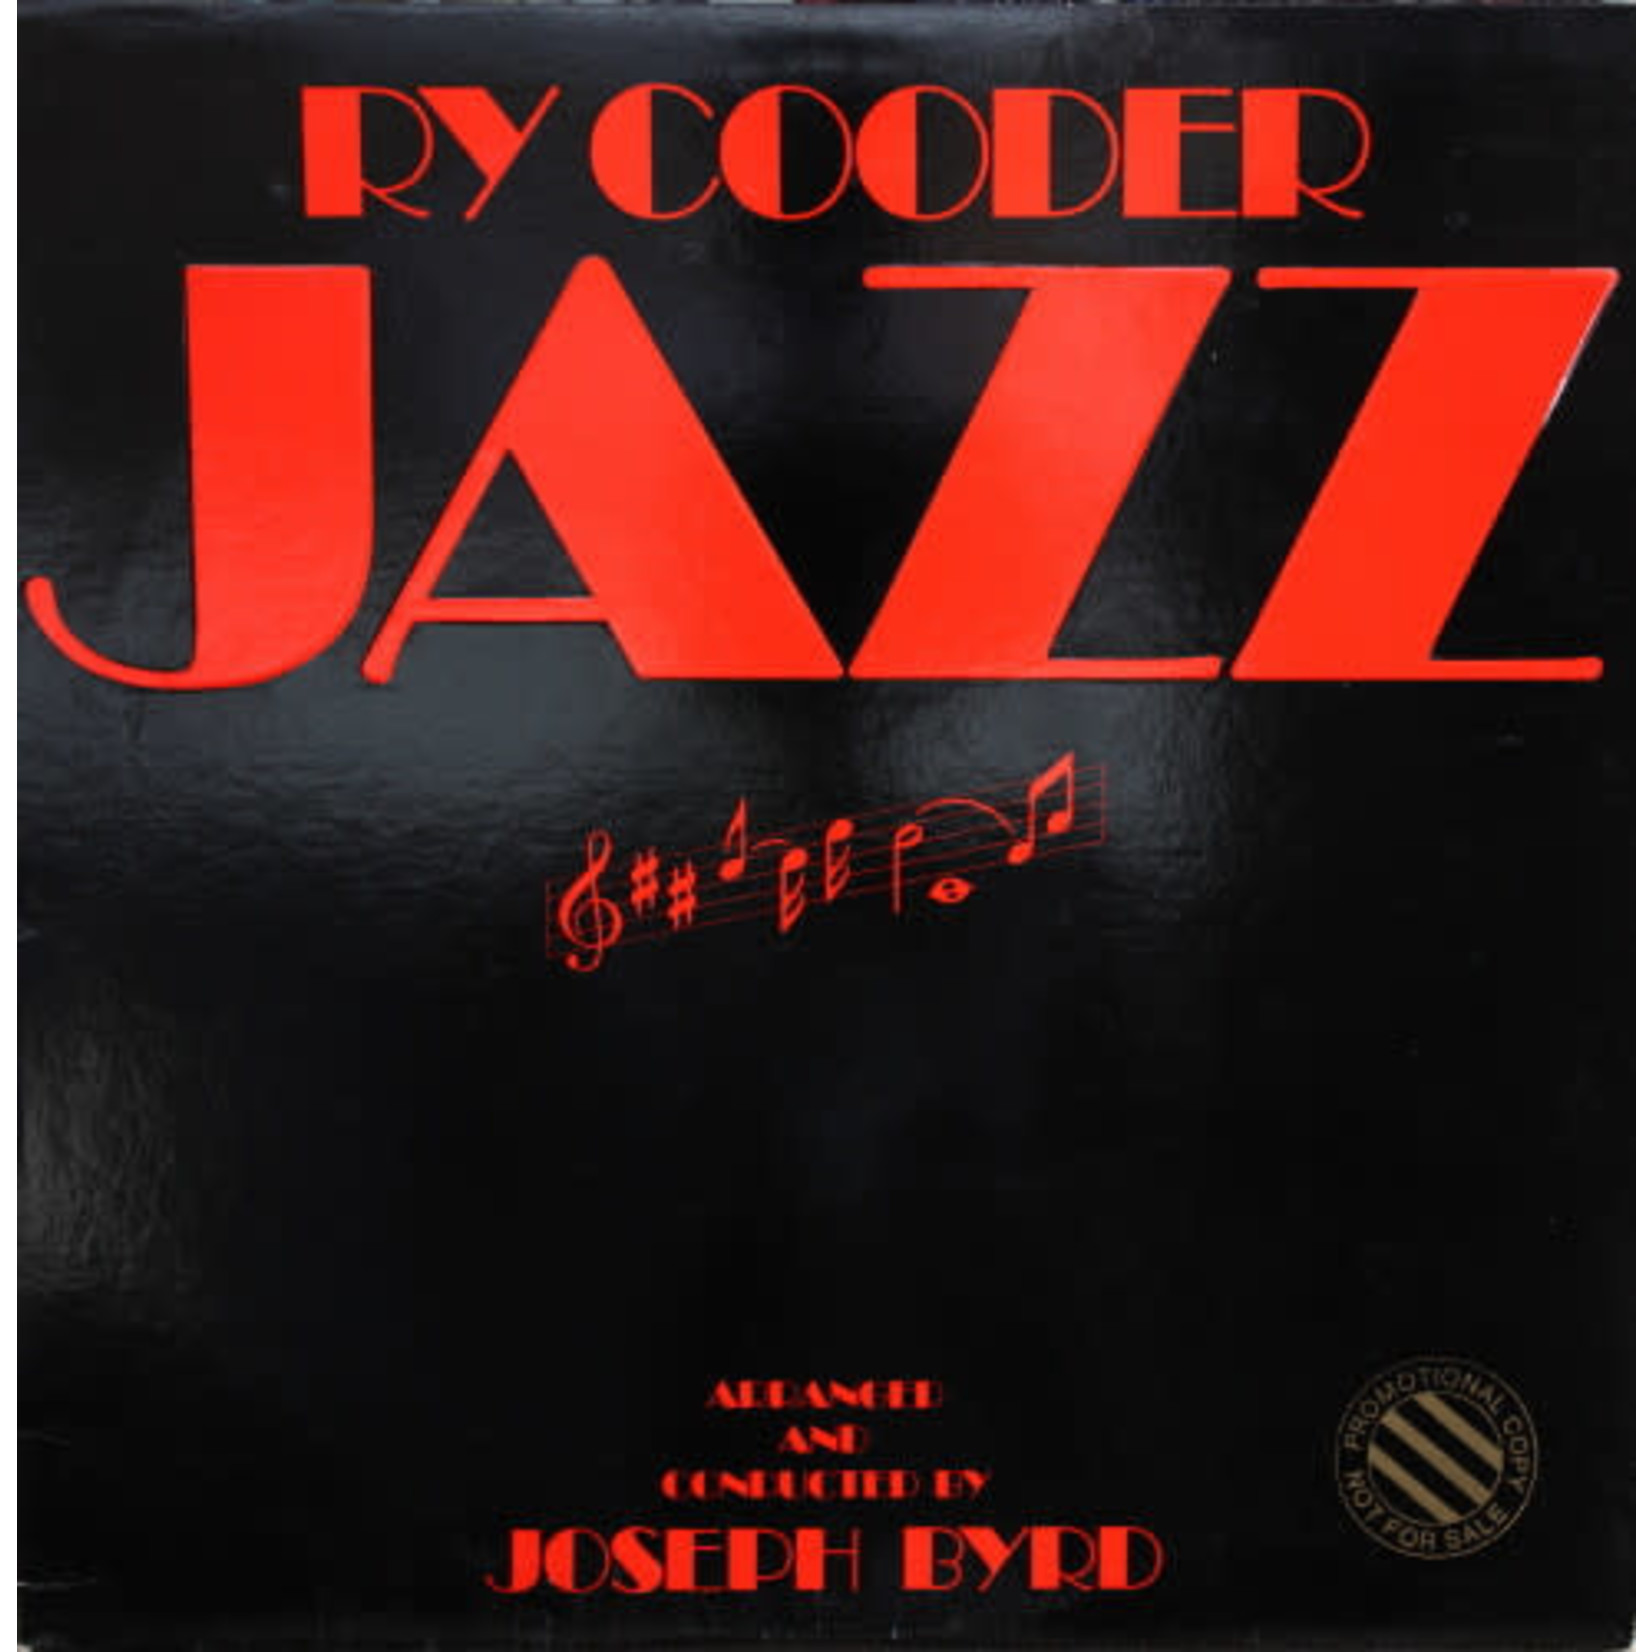 [Vintage] Ry Cooder - Jazz